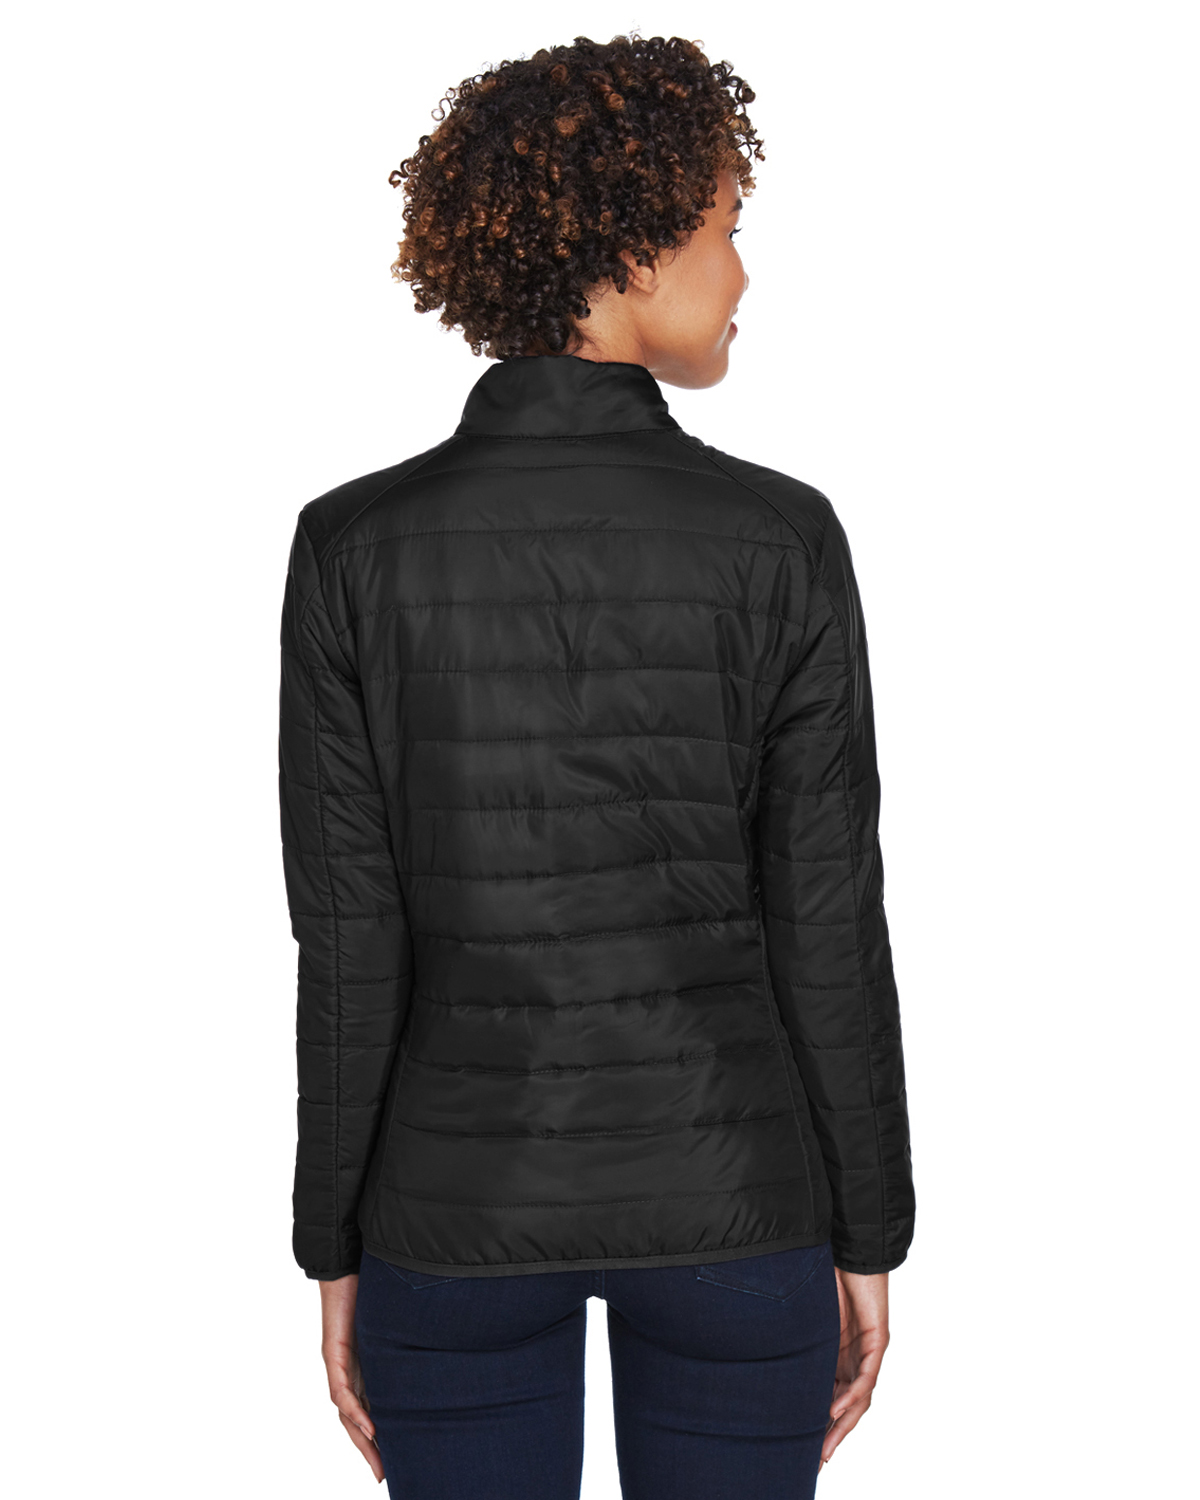 Ladies' Prevail Packable Puffer Jacket - BLACK - S - image 2 of 3